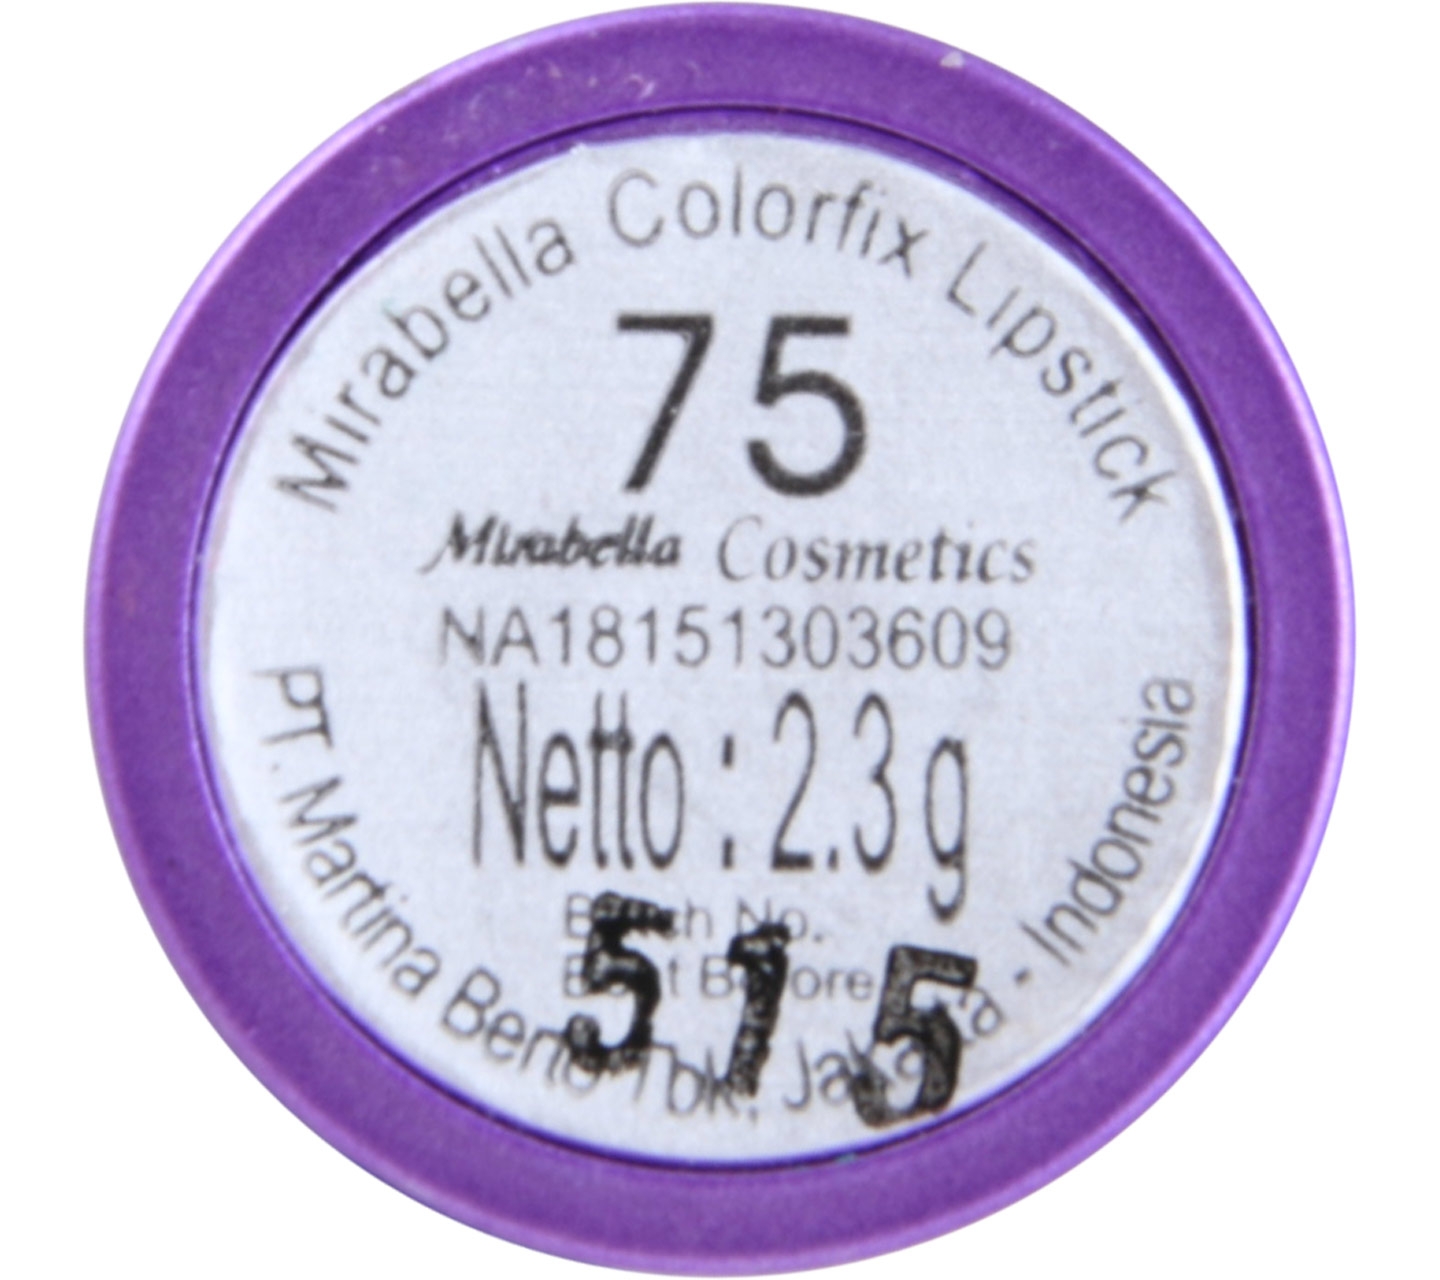 Mirabella 75 Colorfix Lips